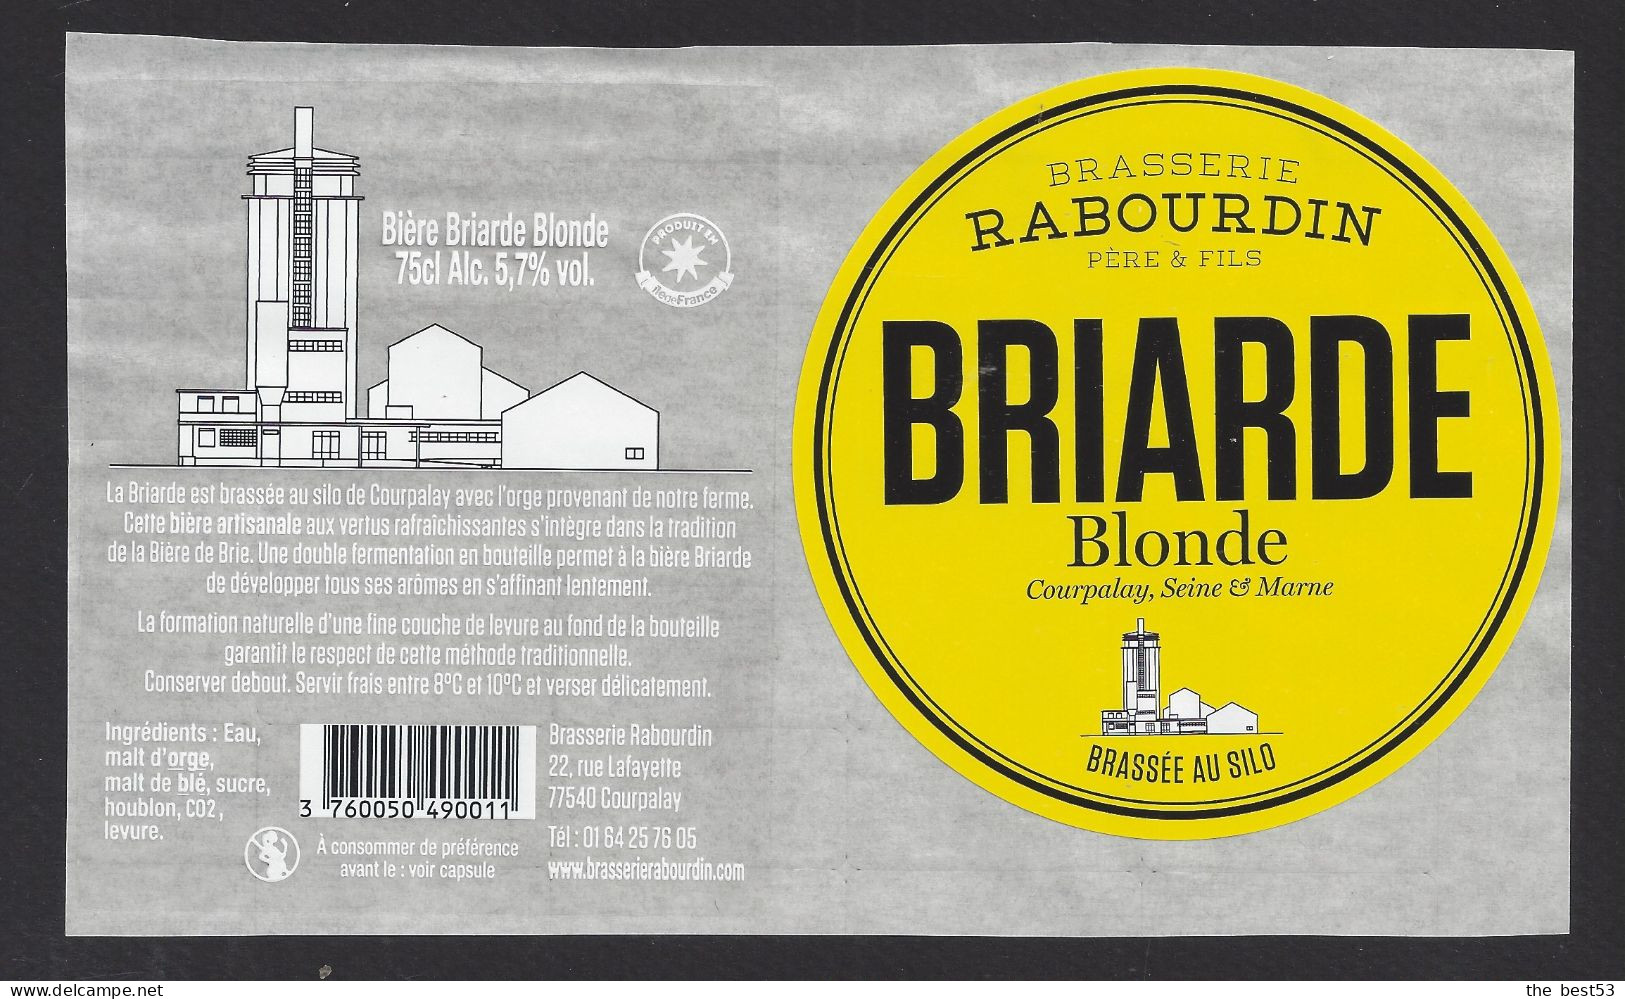 Etiquette De Bière Blonde  -  Briarde  -    Brasserie Rabourdin  à  Courpalay    (77) - Beer